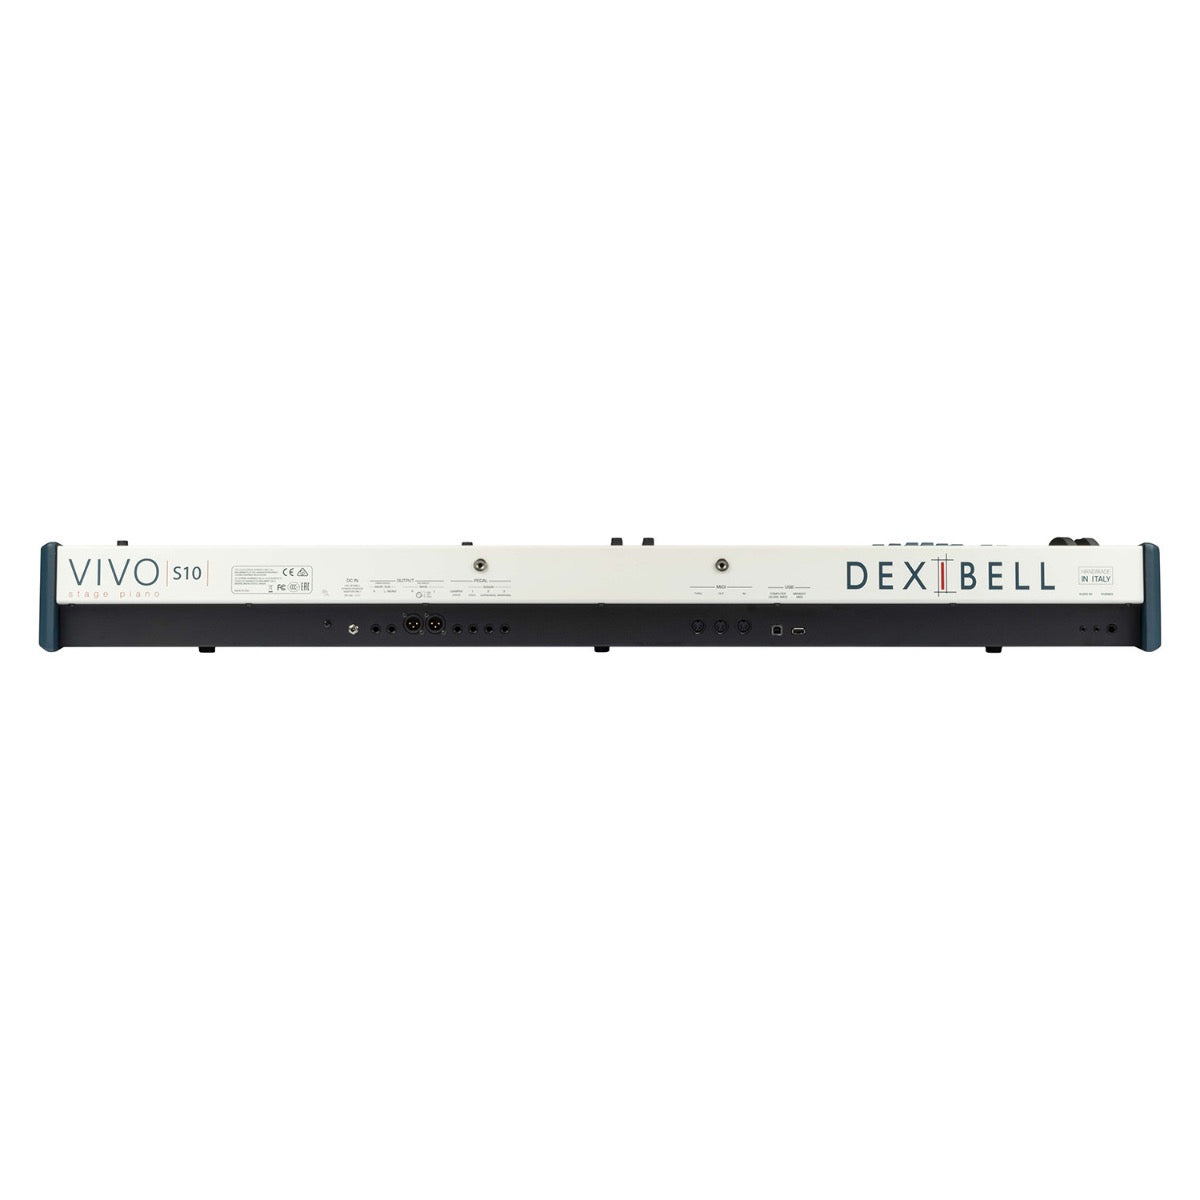 Dexibell VIVO S10 88-Note Stage Piano, View 2